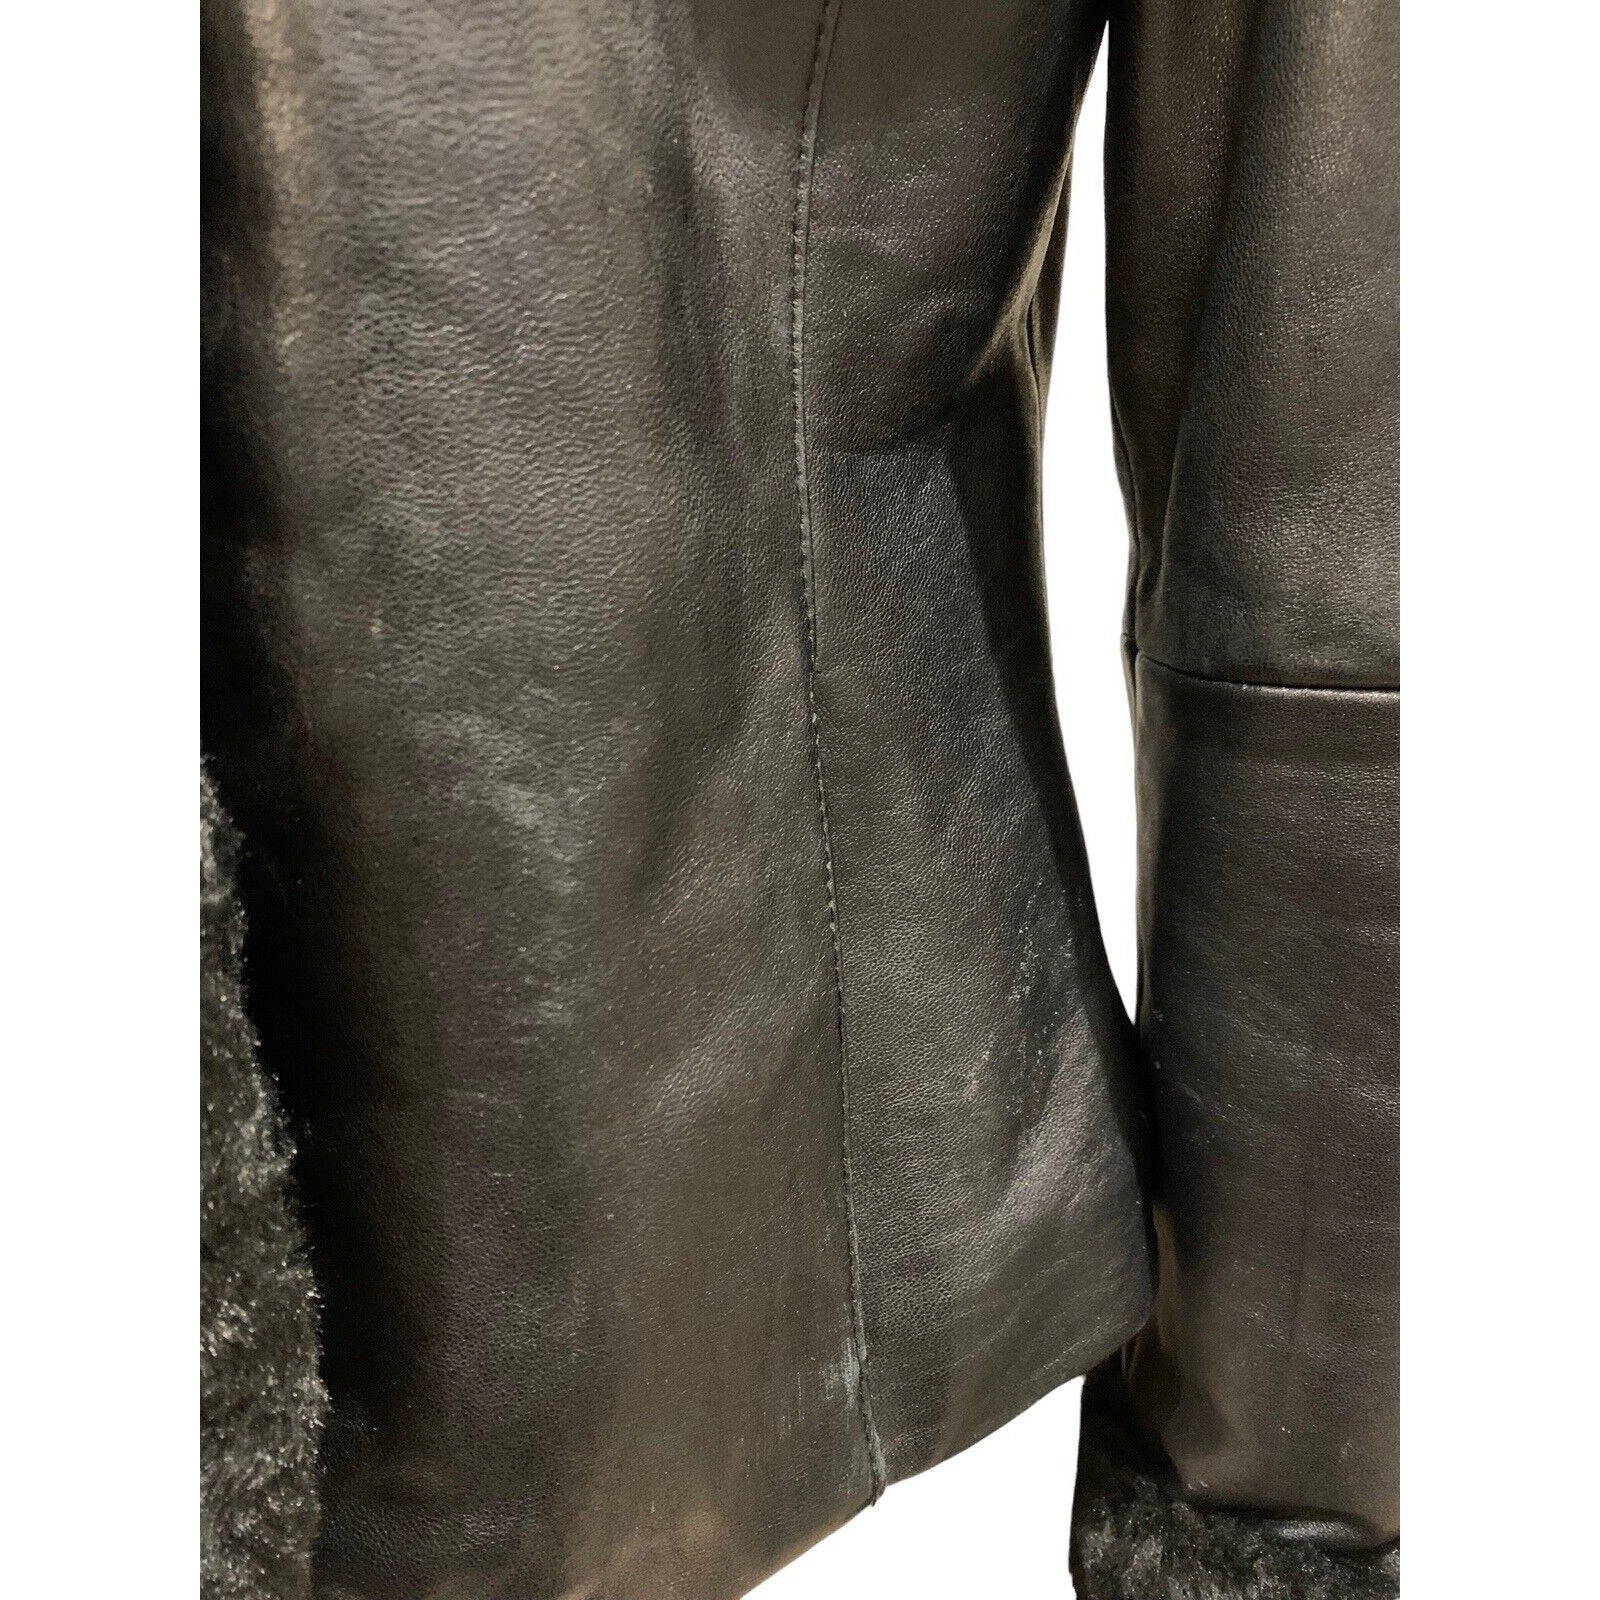 Closeup Of Jacket Sleeve and Side